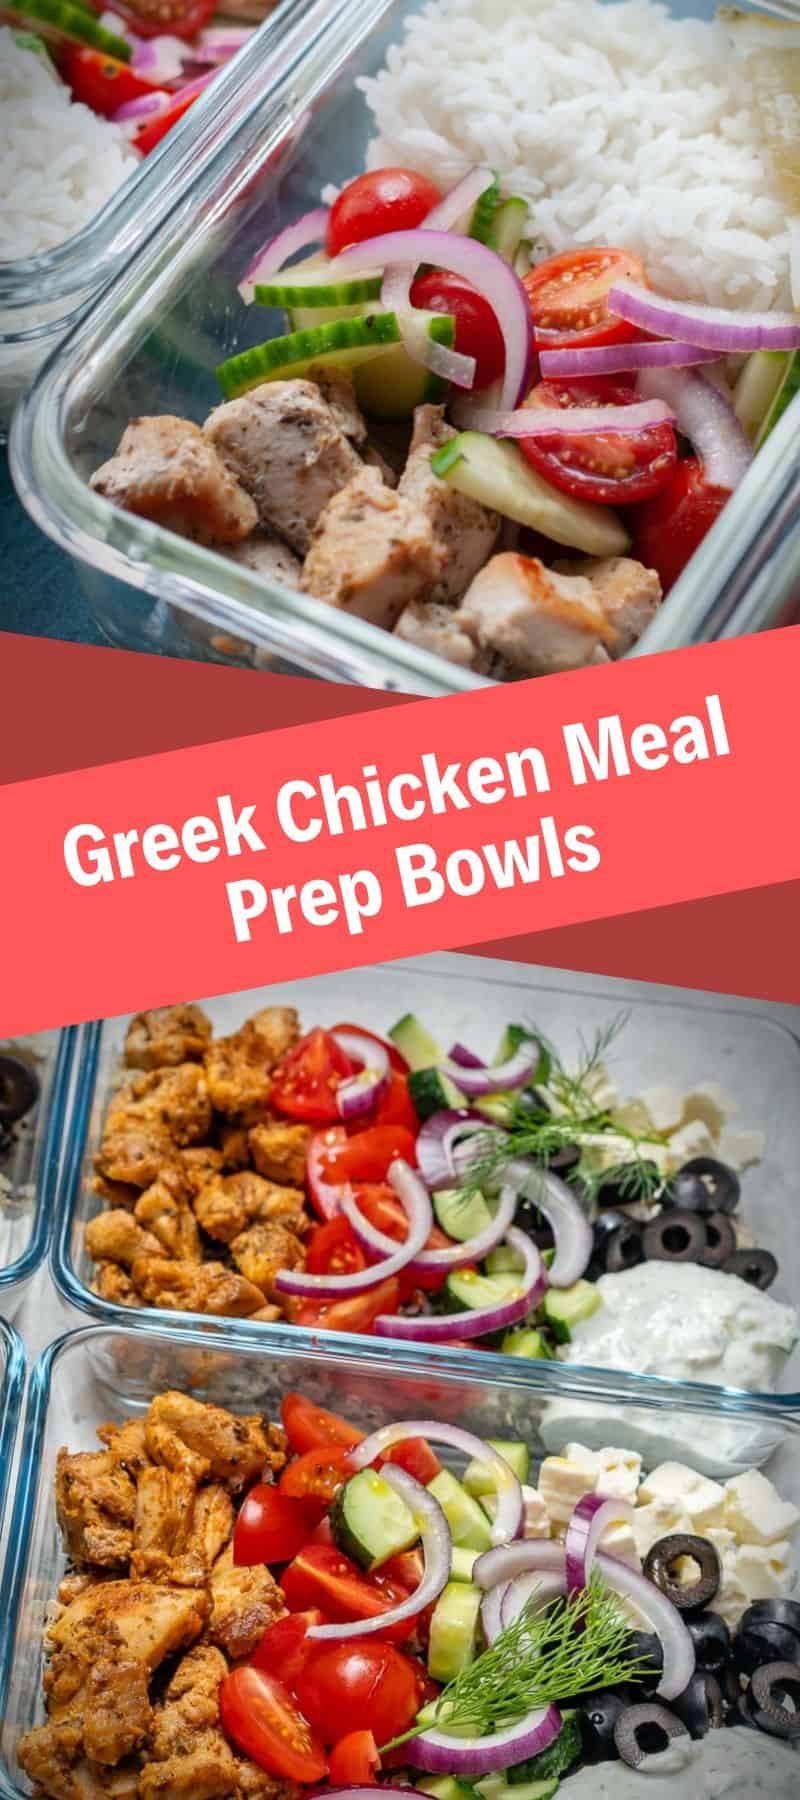 Greek Chicken Meal Prep Bowls